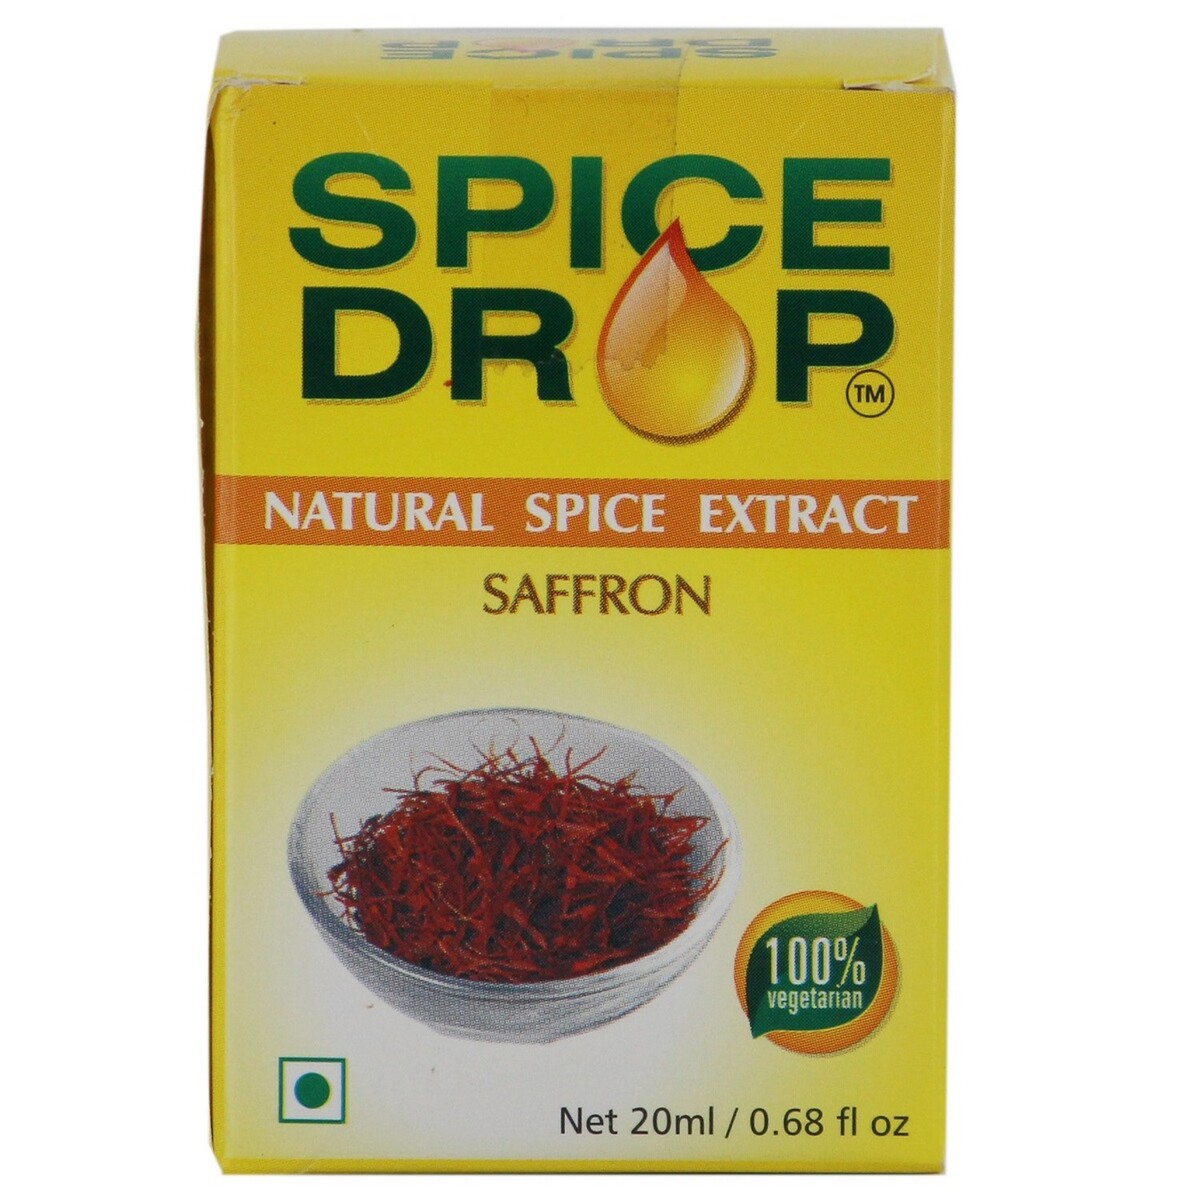 Spice Drop Saffron Natural Spice Extract 20ml